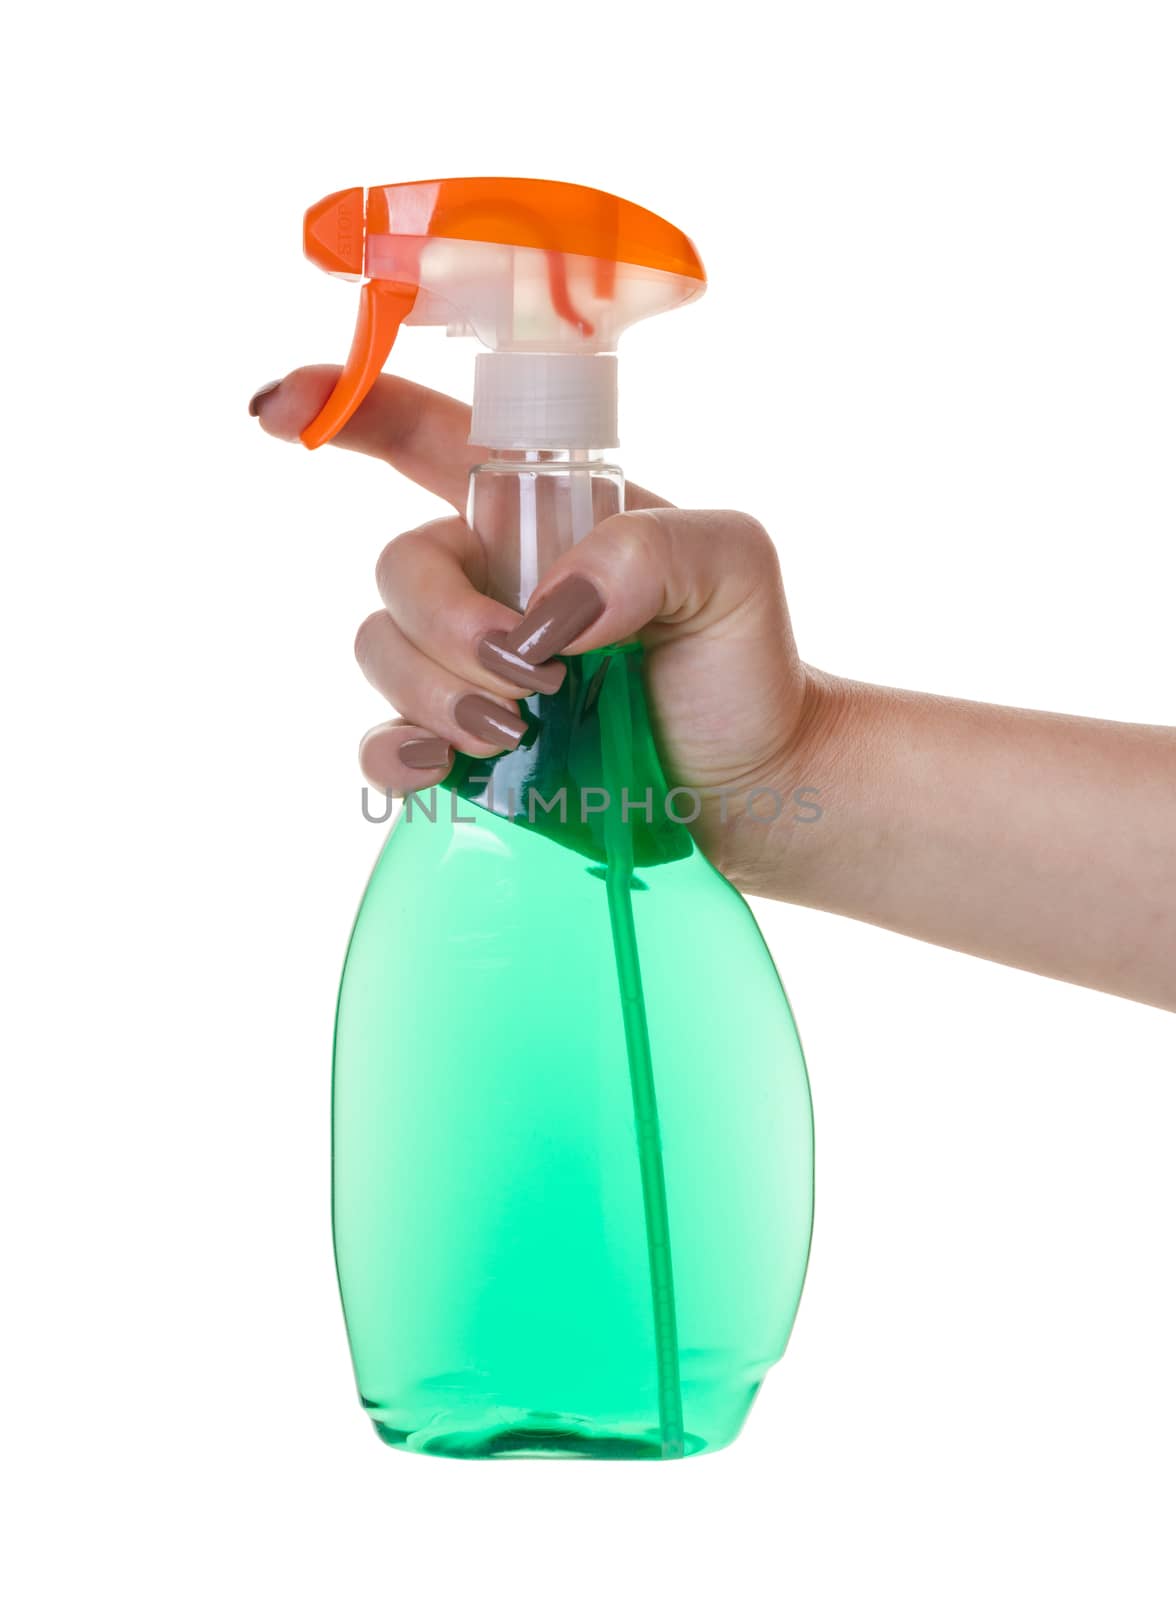 detergent with sprayer in hand  by MegaArt